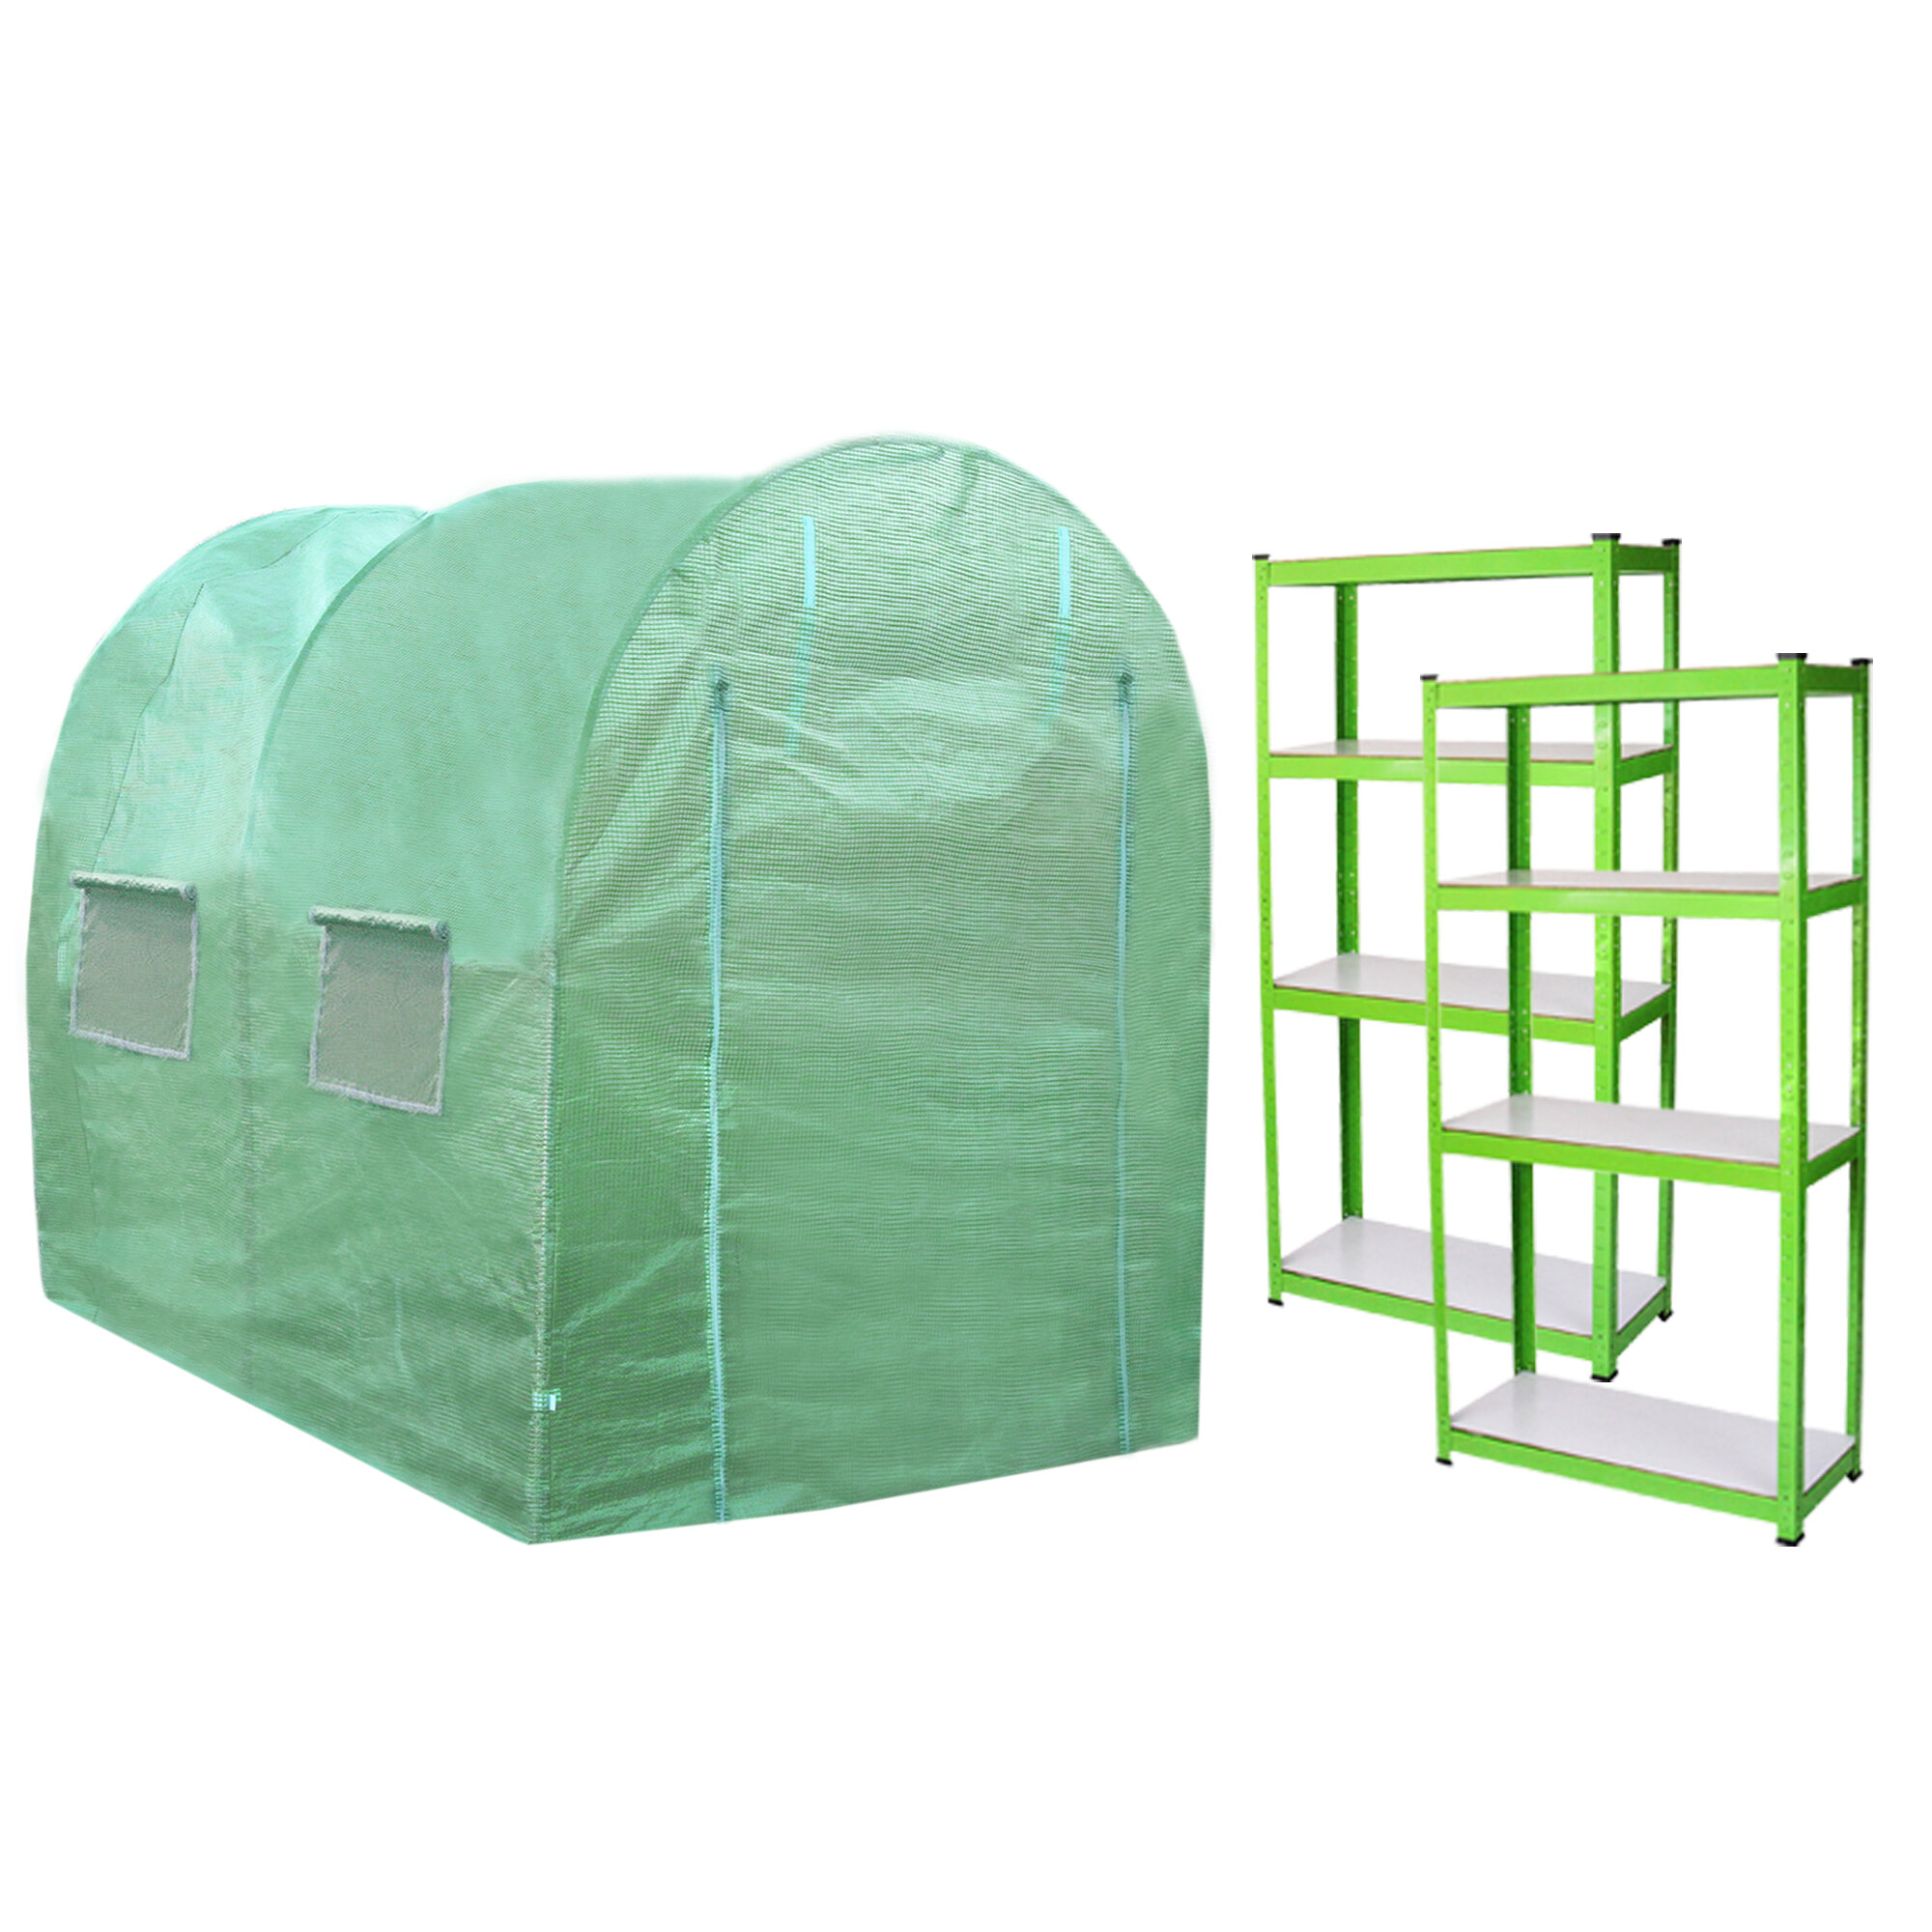 Polytunnel Greenhouse Walk In Galvanised Racking Garden Grow Tent 25mm 4 x 2m